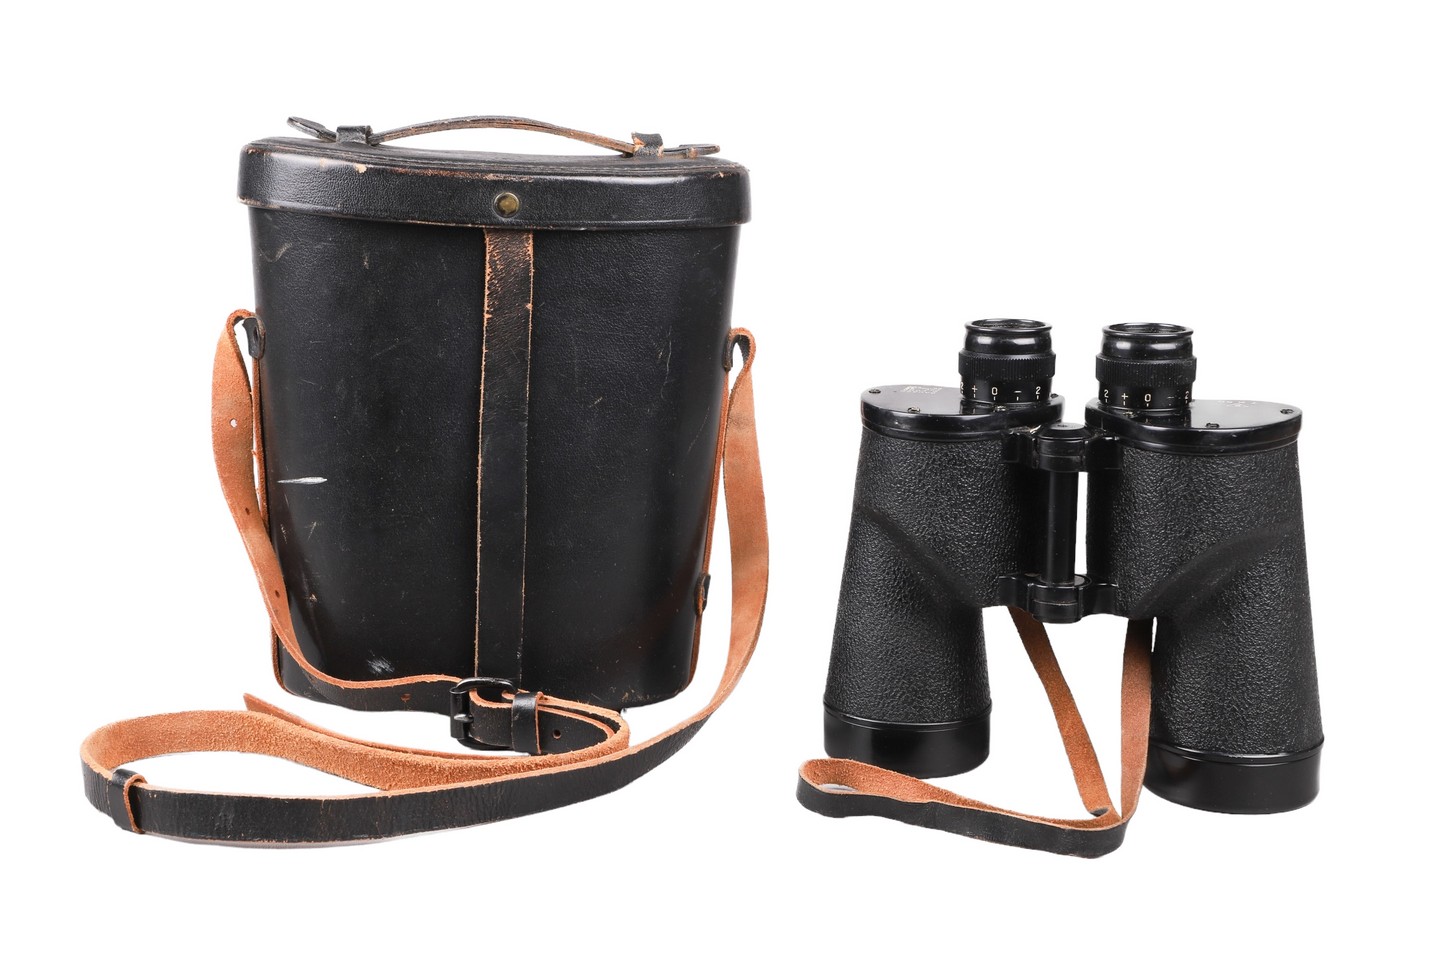 Bausch & Lomb 7X50 binoculars, serial